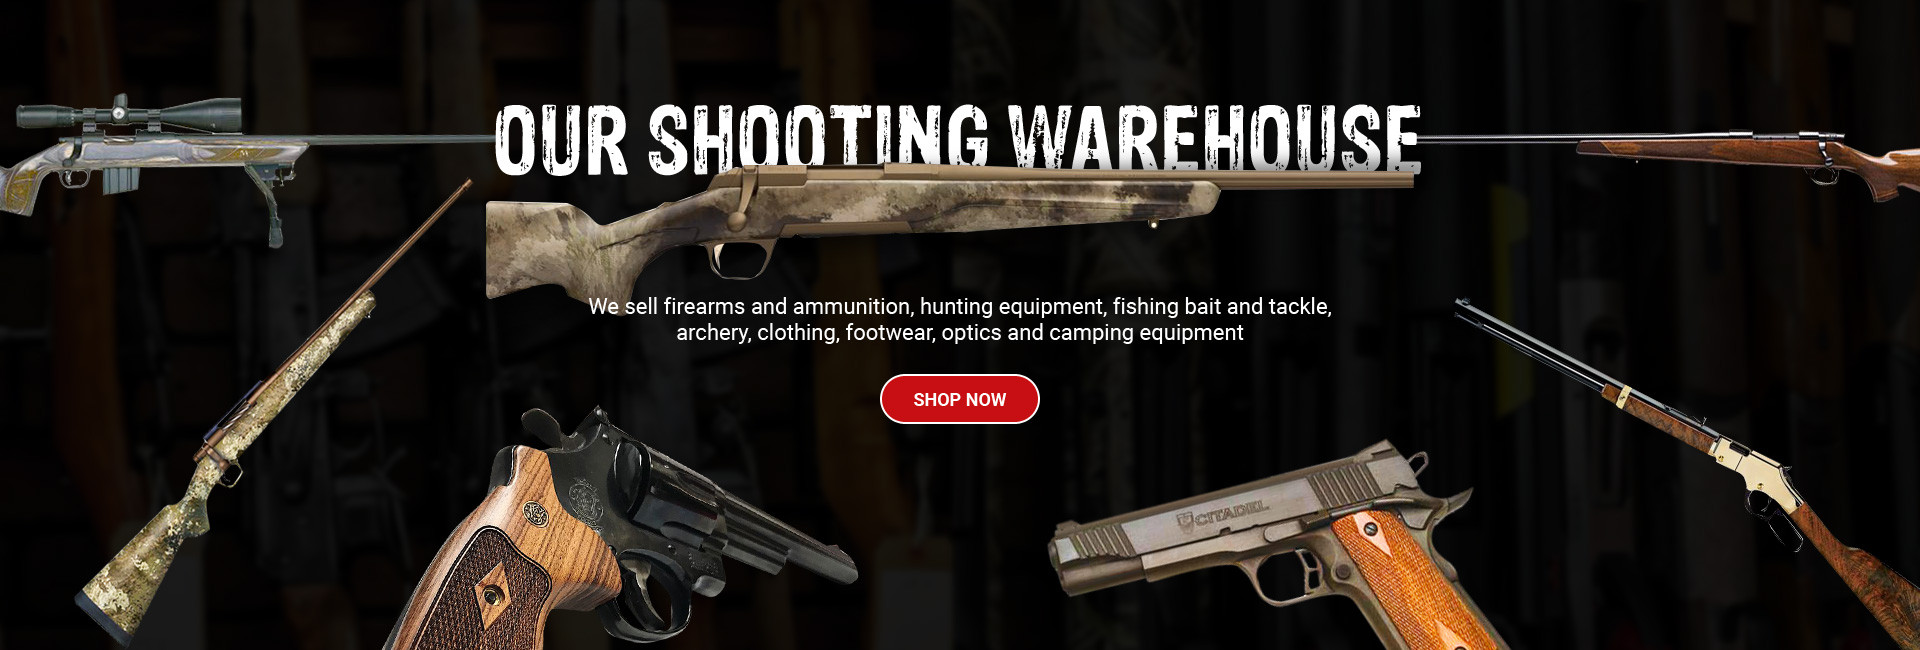 Archery Hunting Equipment, Buy Firearms Online